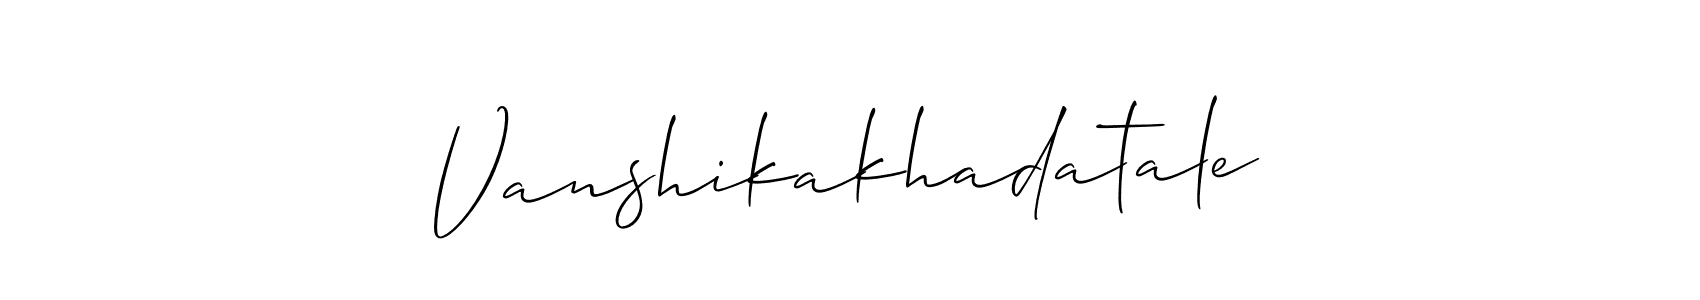 How to make Vanshikakhadatale signature? Allison_Script is a professional autograph style. Create handwritten signature for Vanshikakhadatale name. Vanshikakhadatale signature style 2 images and pictures png